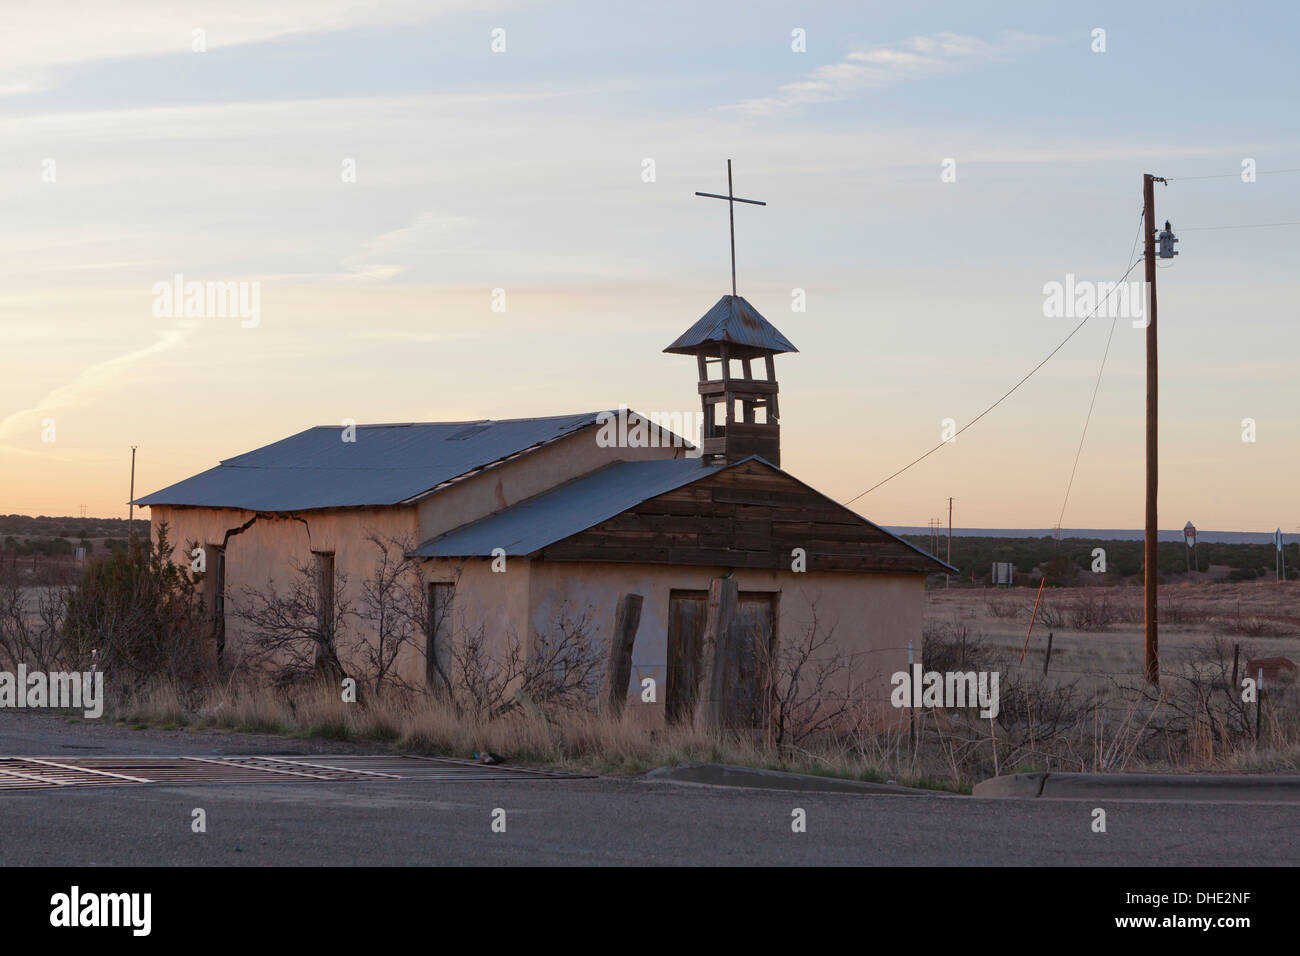 Abandoned church building - New Mexico USA Stock Photo